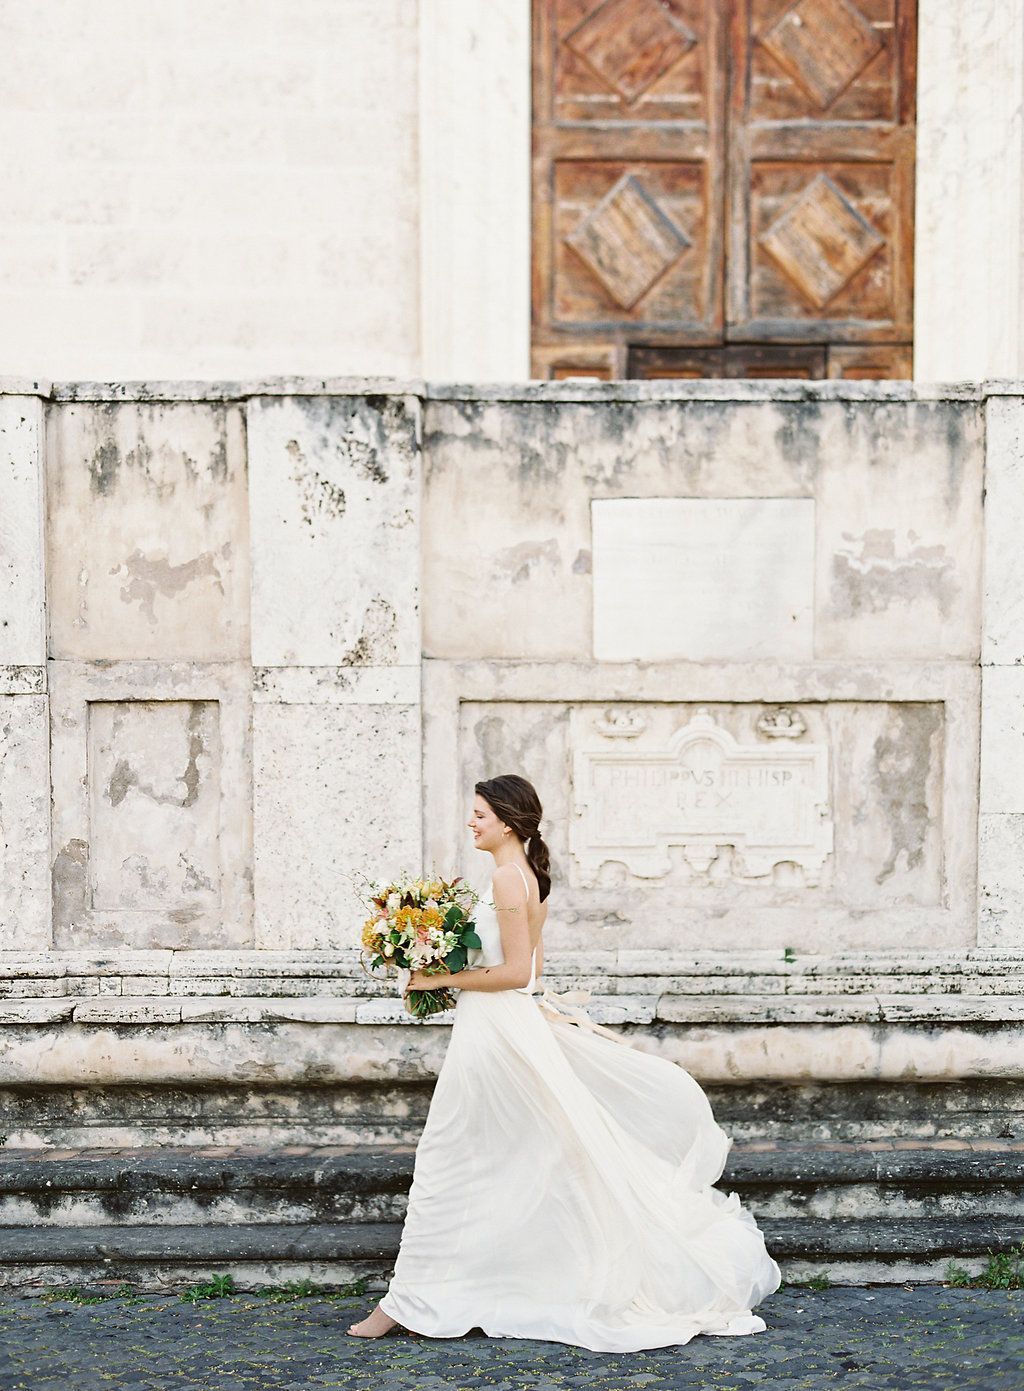 Vicki_Grafton_Photography_Rome_Italy_Wedding_Photographer_2017-22